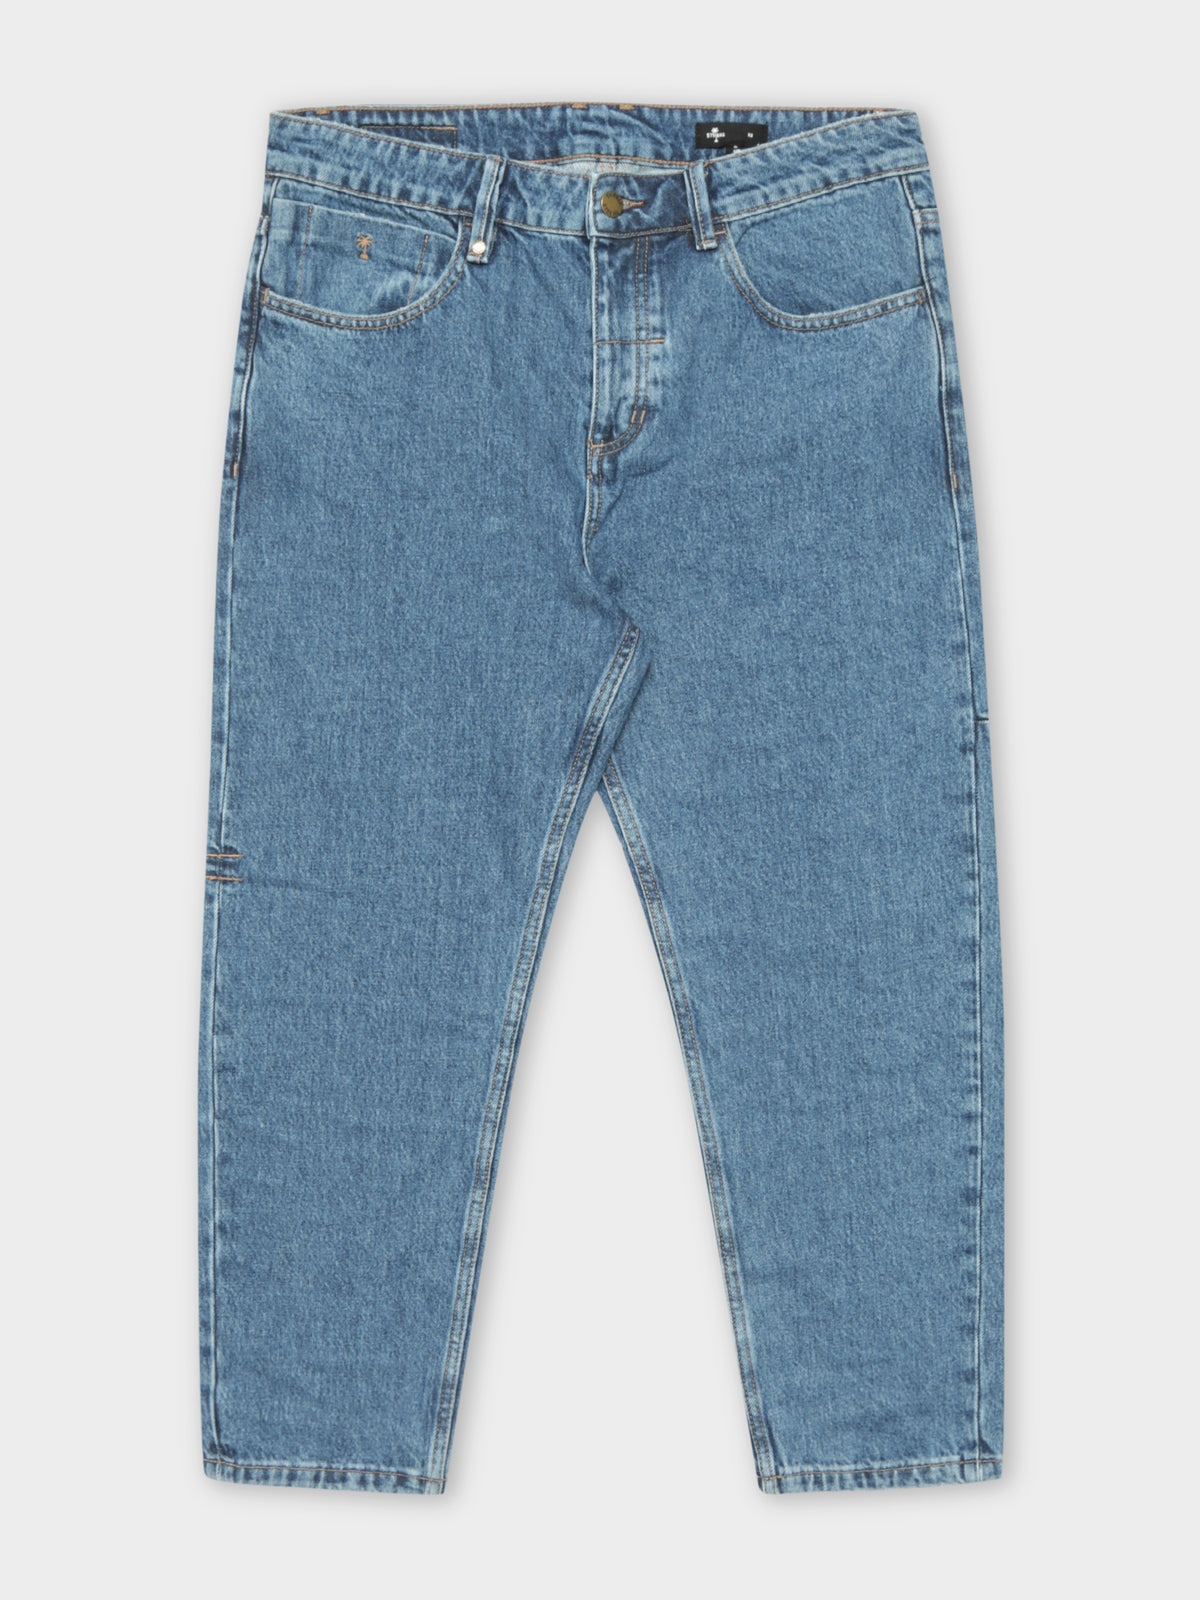 Chopped Denim Jeans in Rinsed Blue